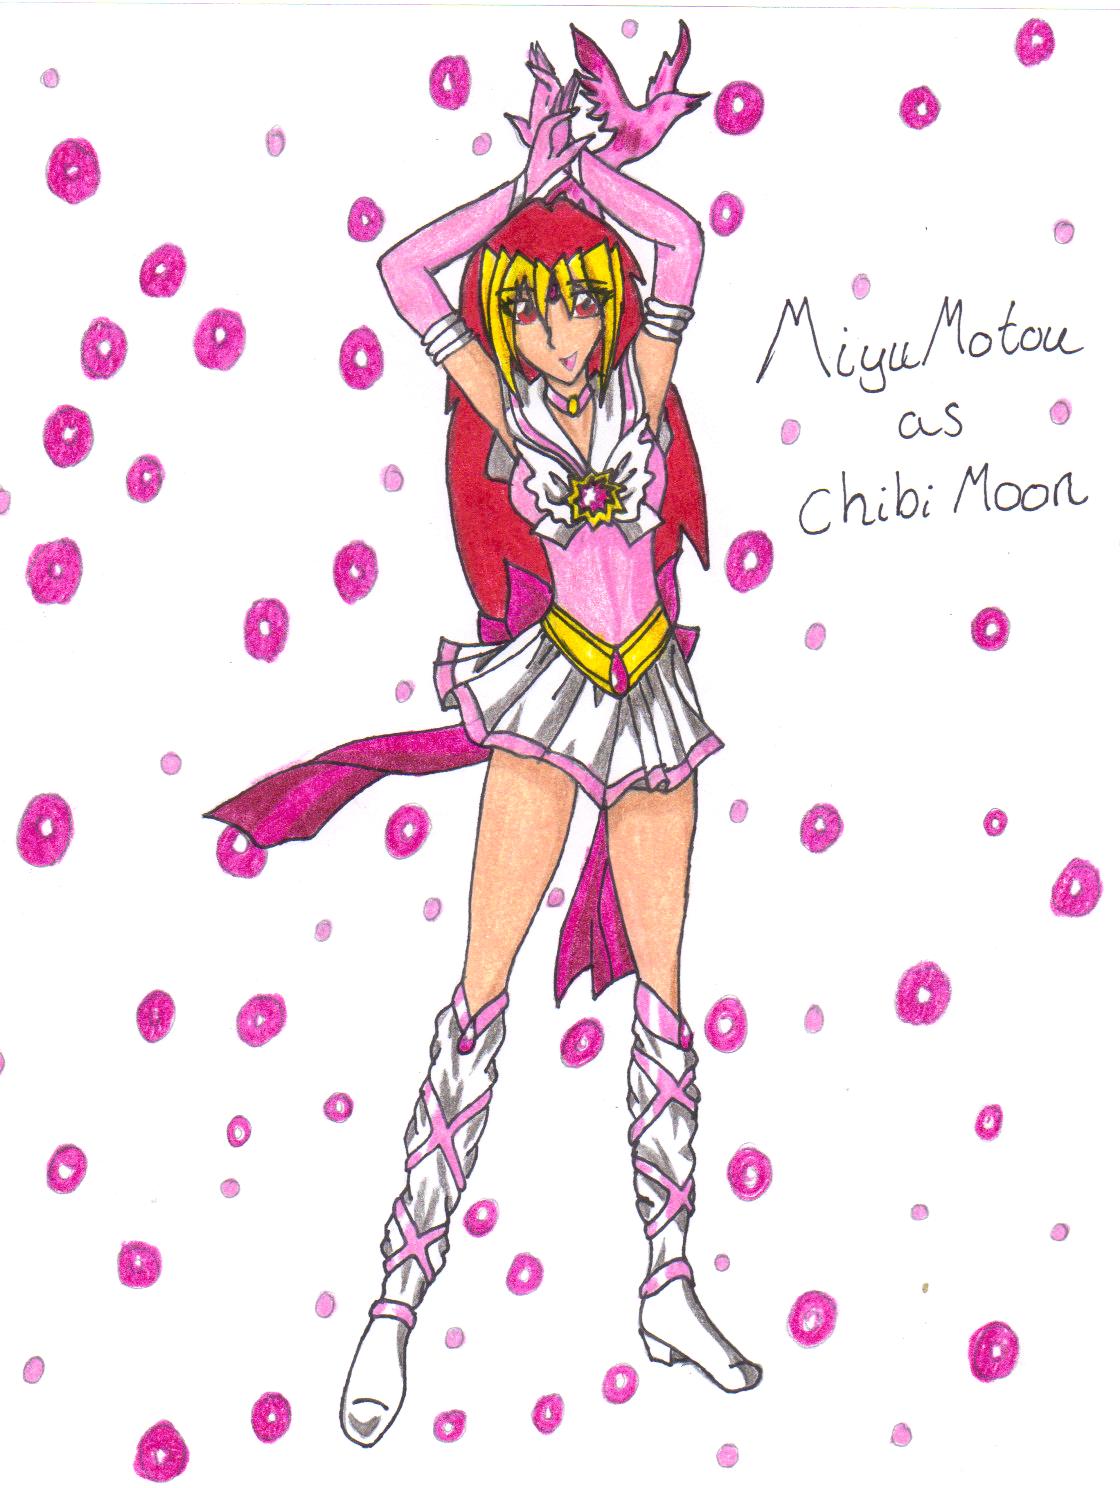 MiyuMotou as Sailor Chibi Moon by setoXyamiKaiba4ever